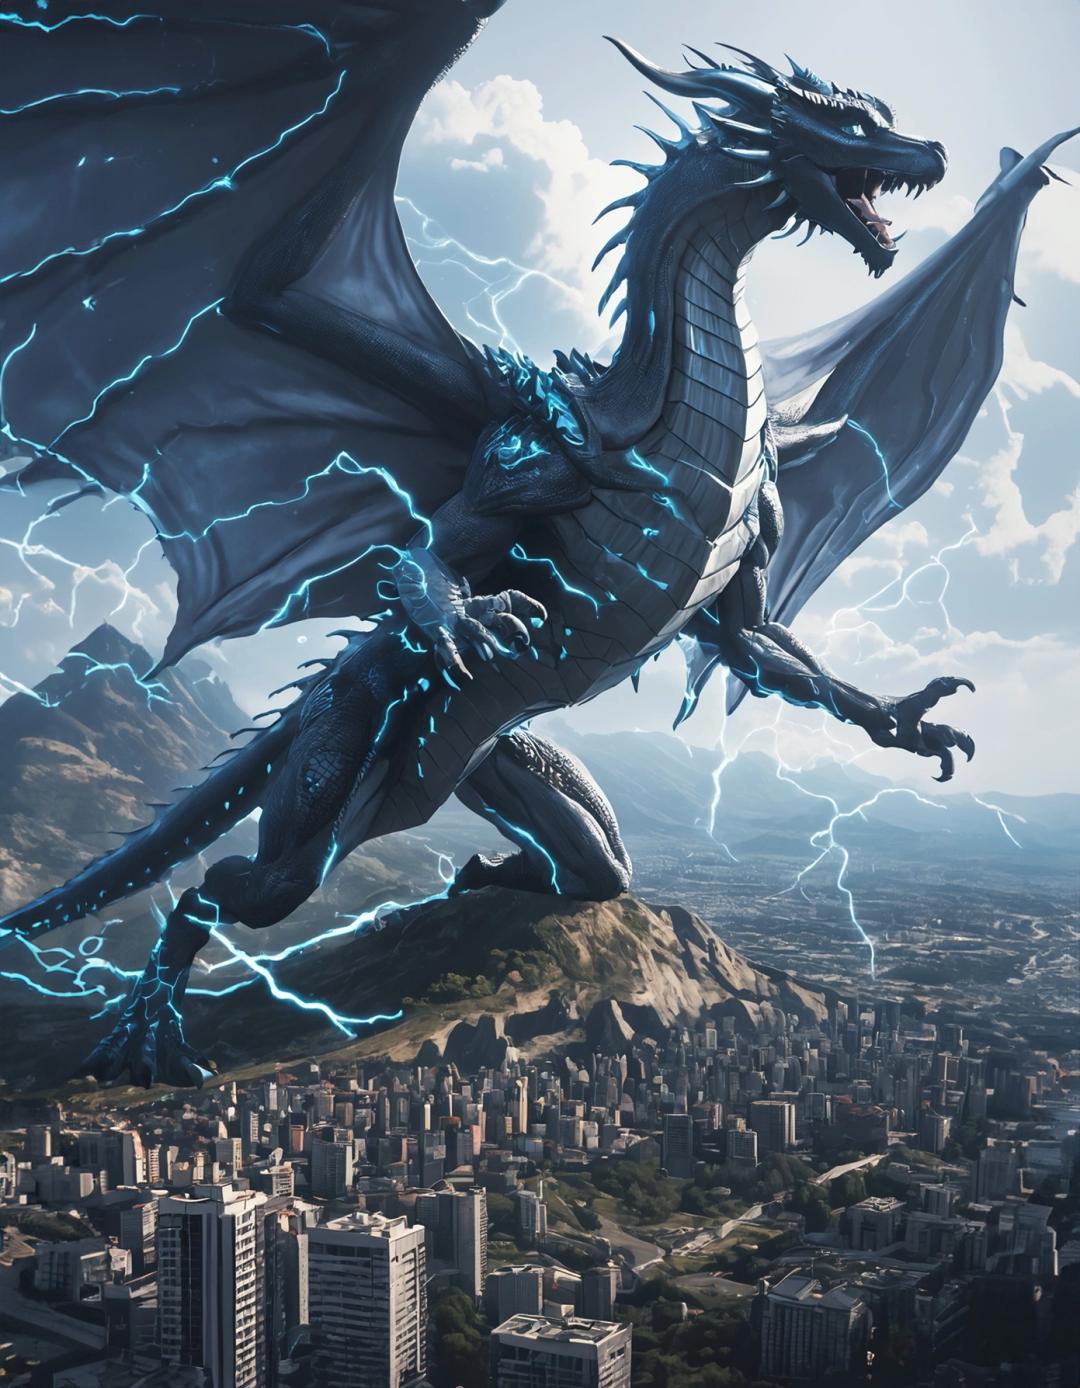 Giant Dragon over modern city